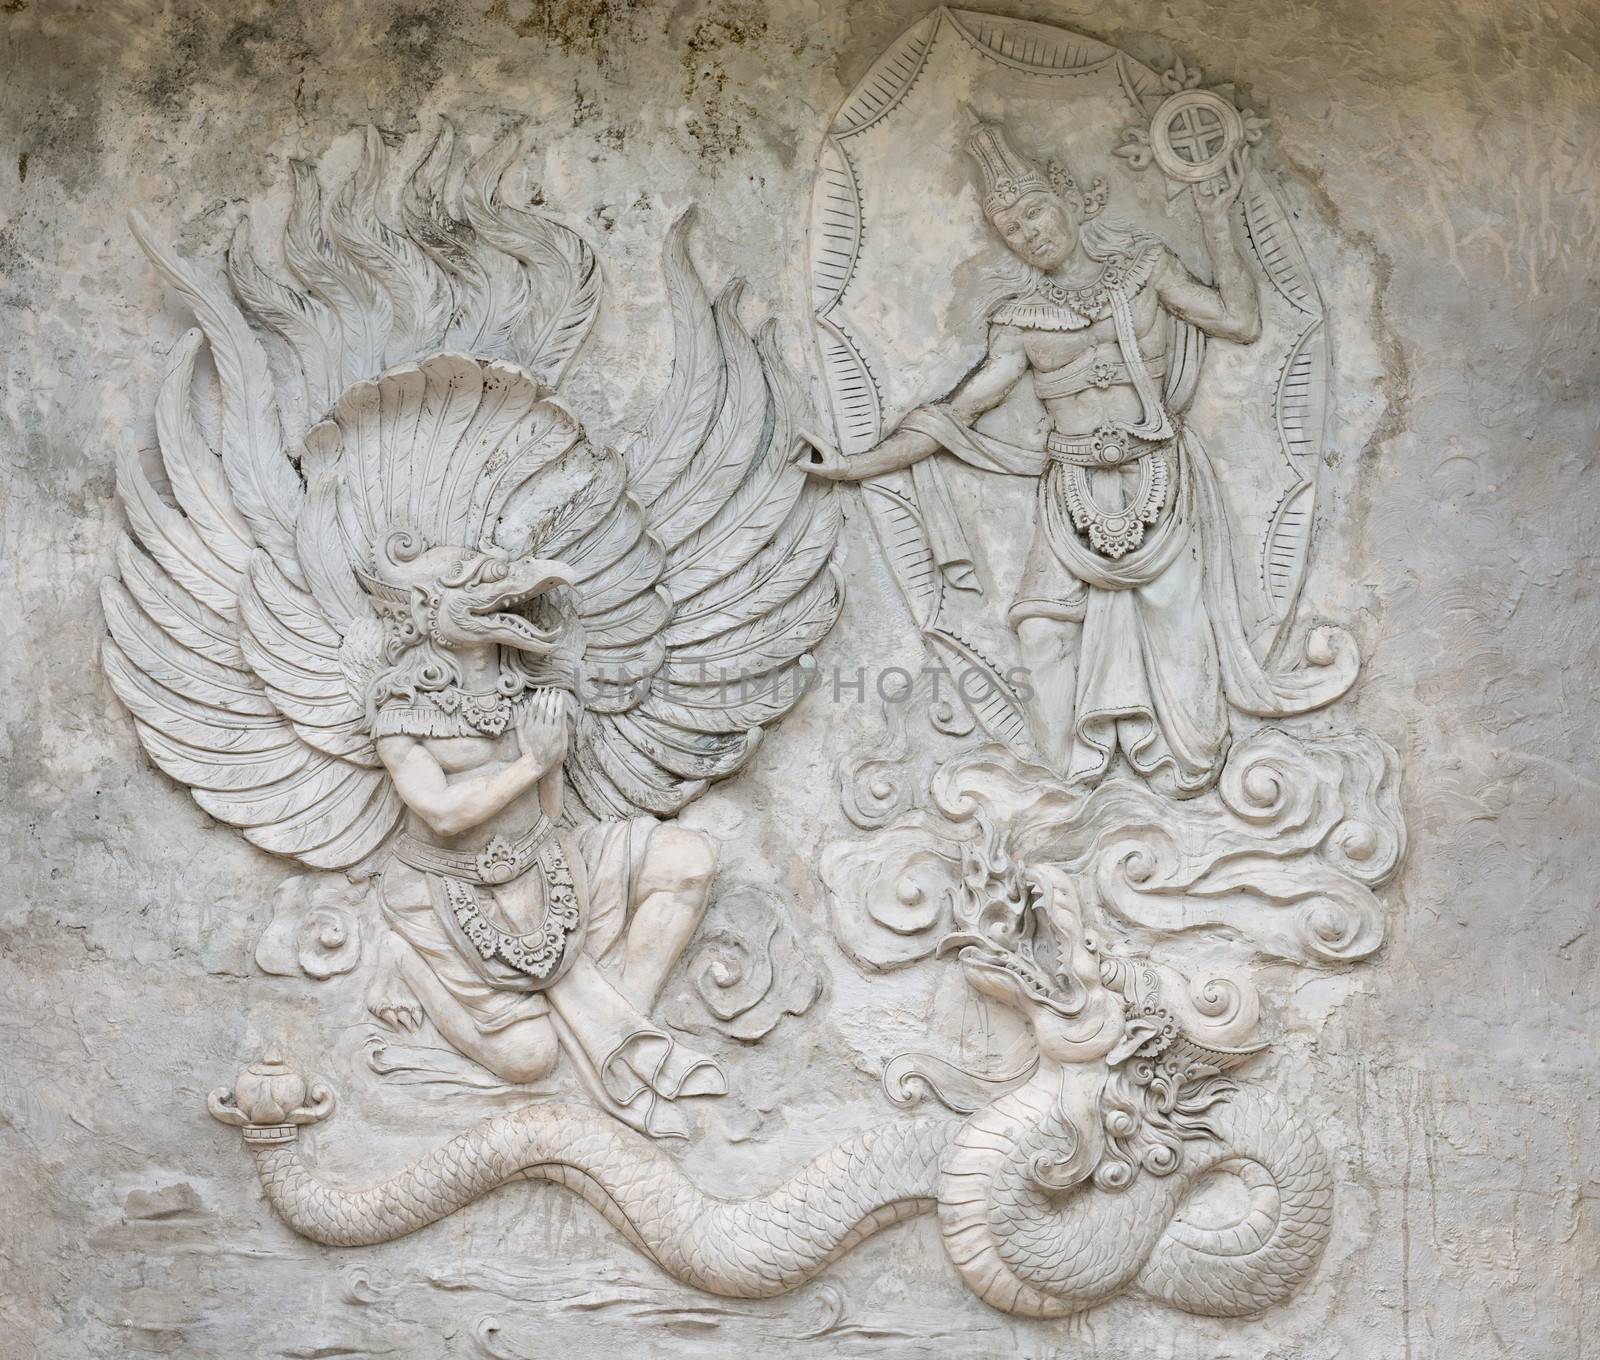 Garuda undaunted hindu mythic bird image by iryna_rasko